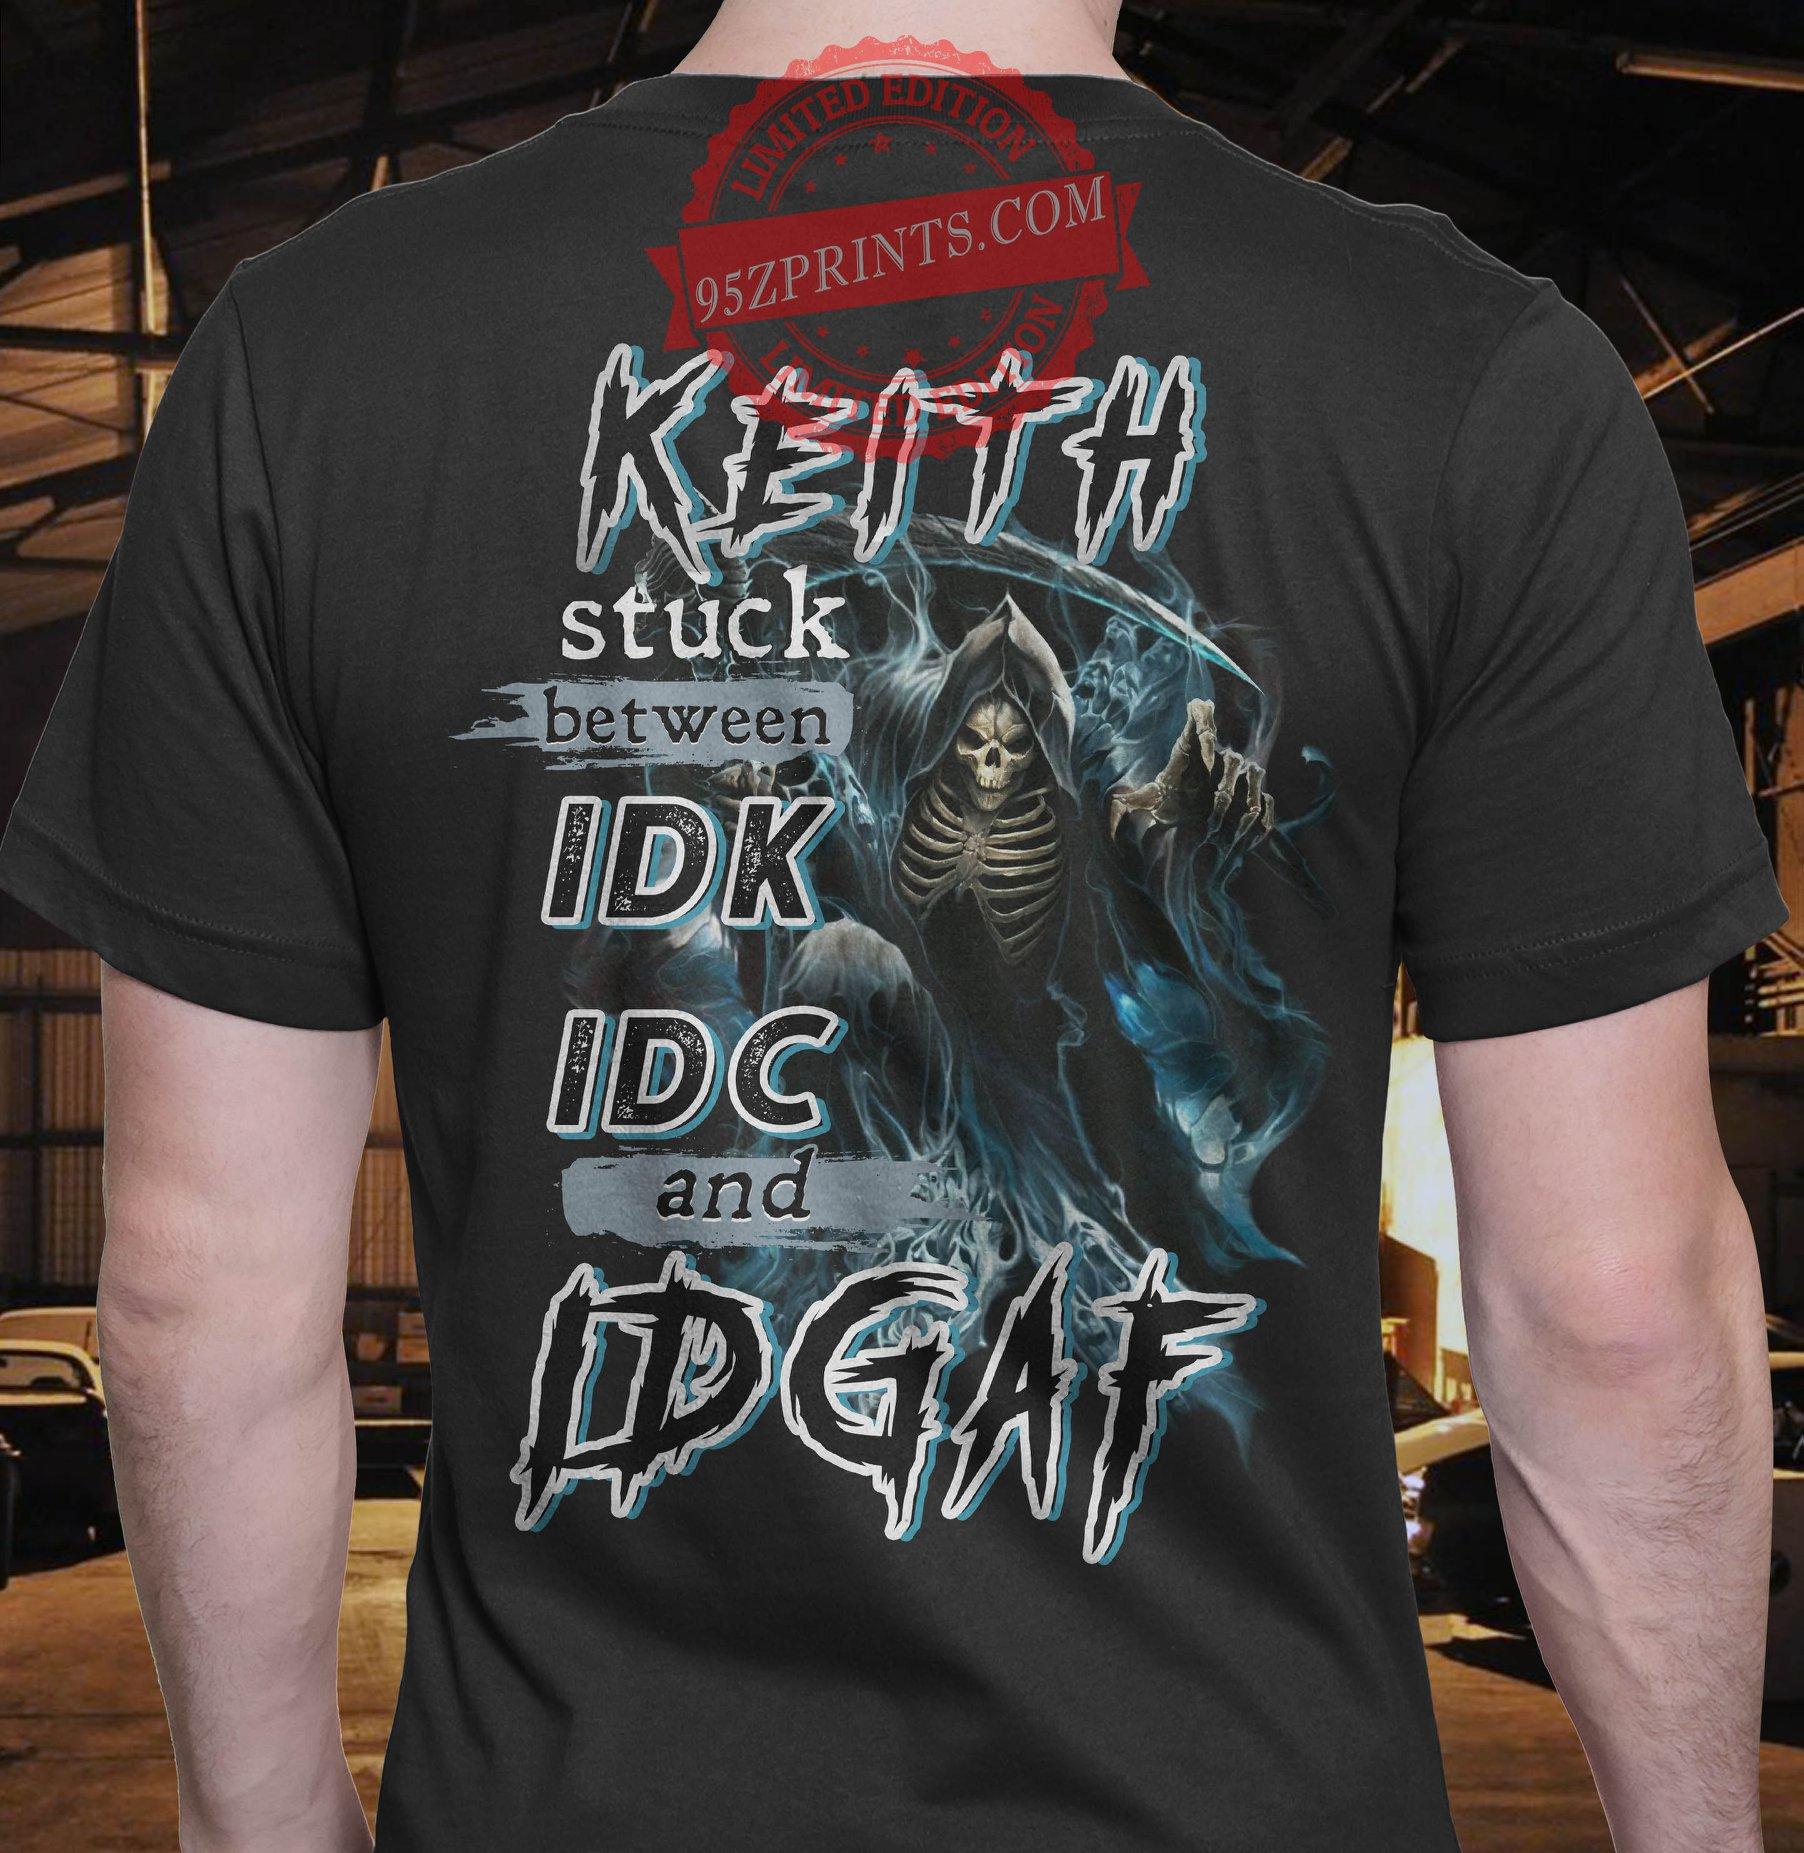 God Death Skeleton - Keith stuck between idk idc and idgaf